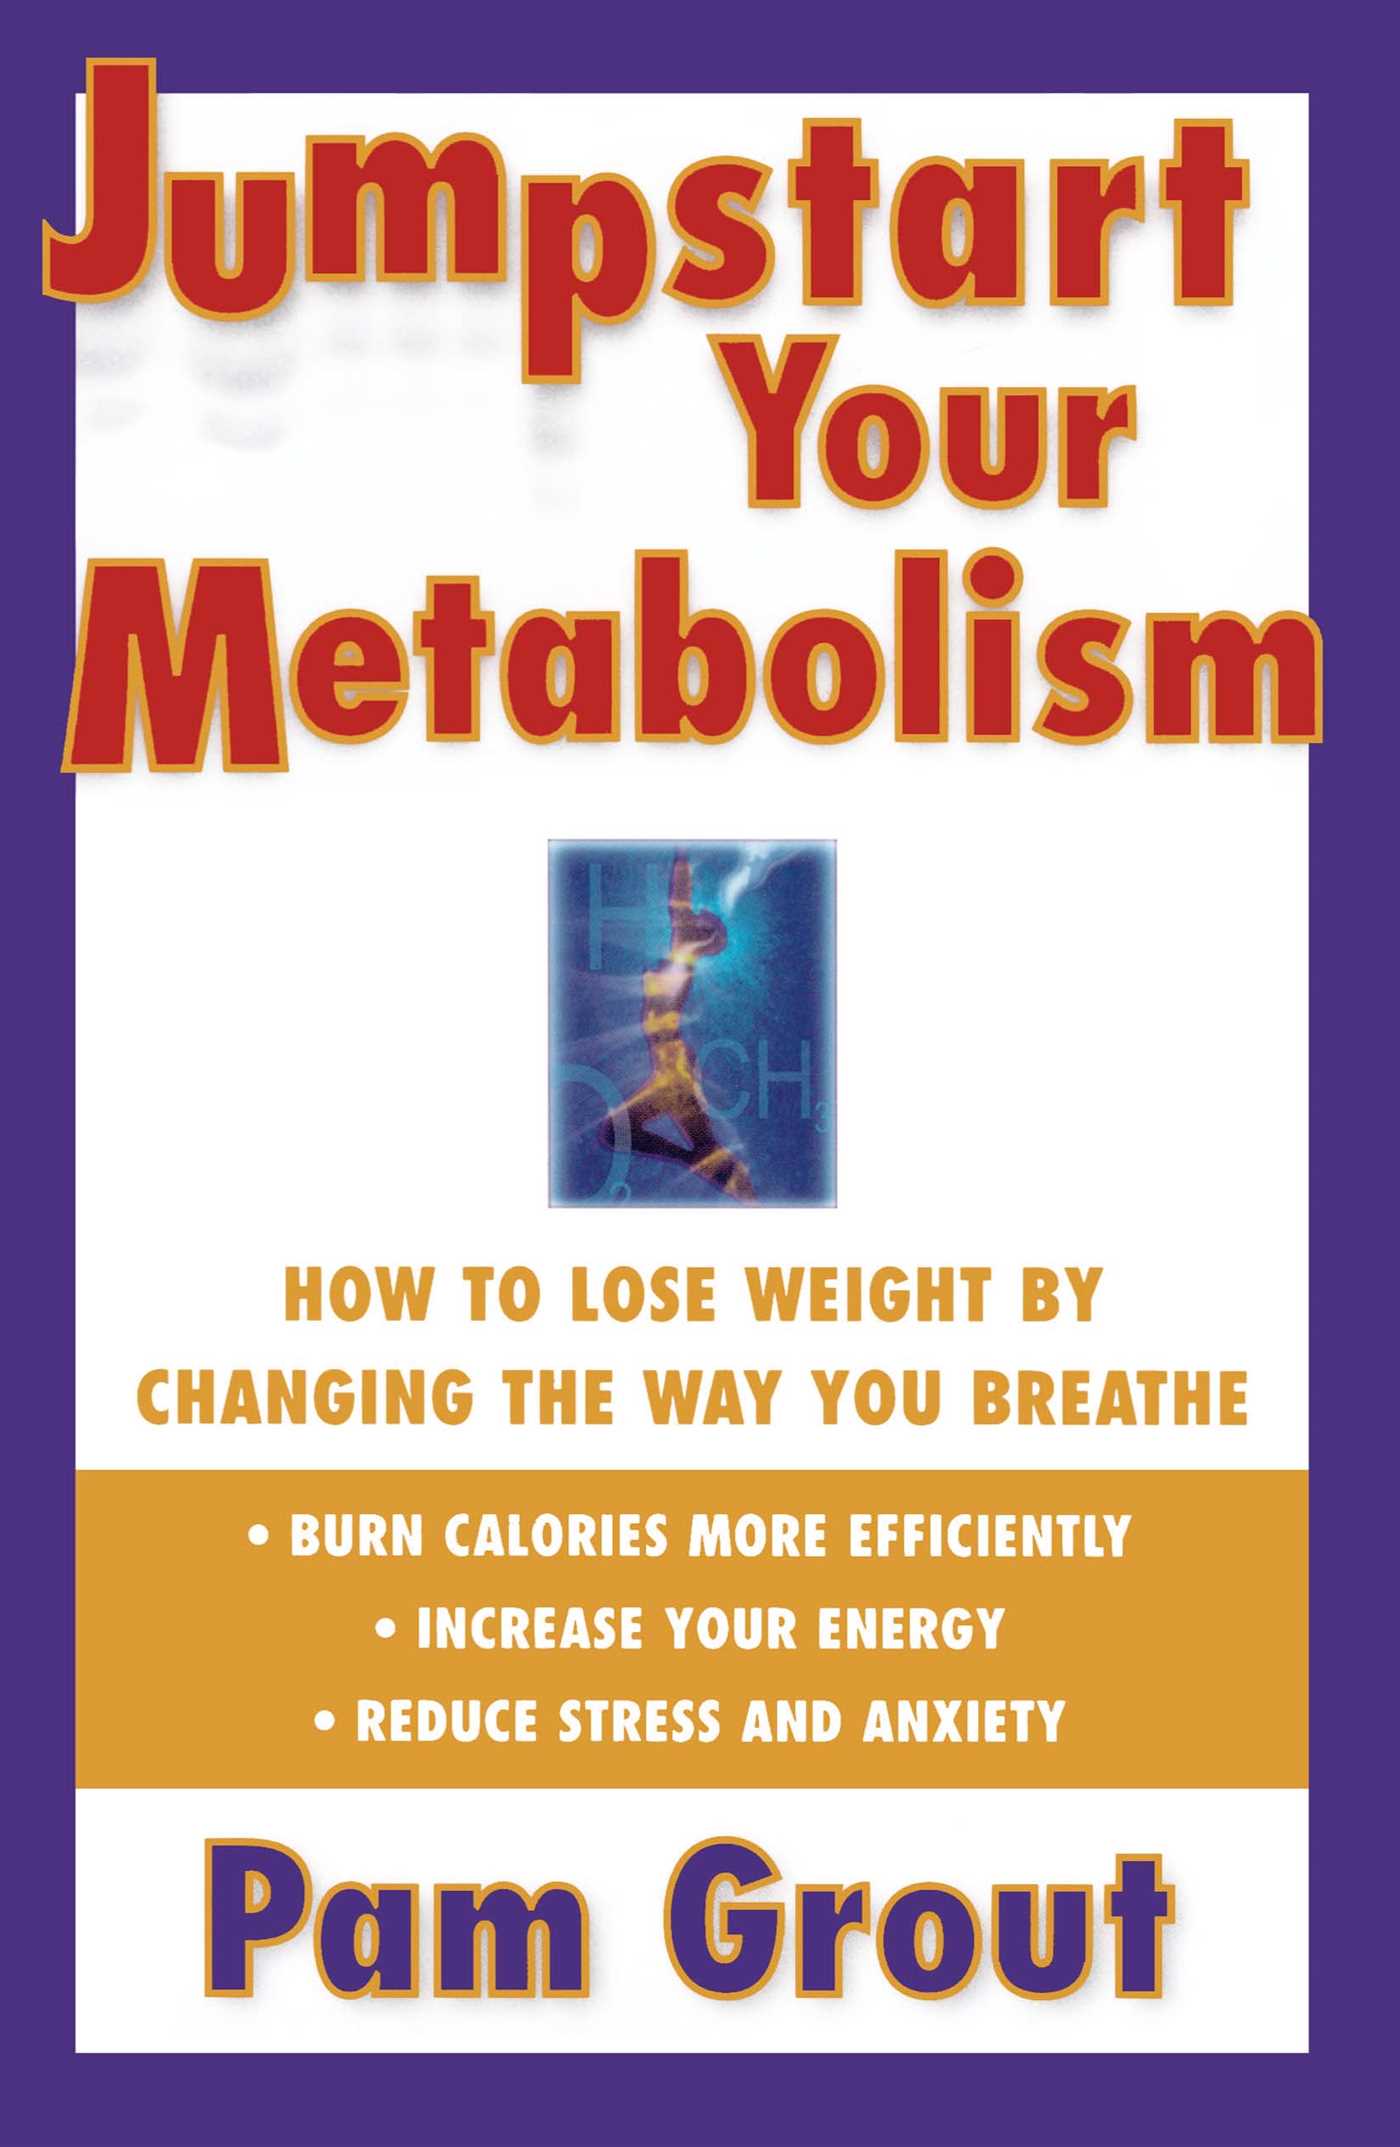 Jumpstart Your Metabolism - 10-14.99